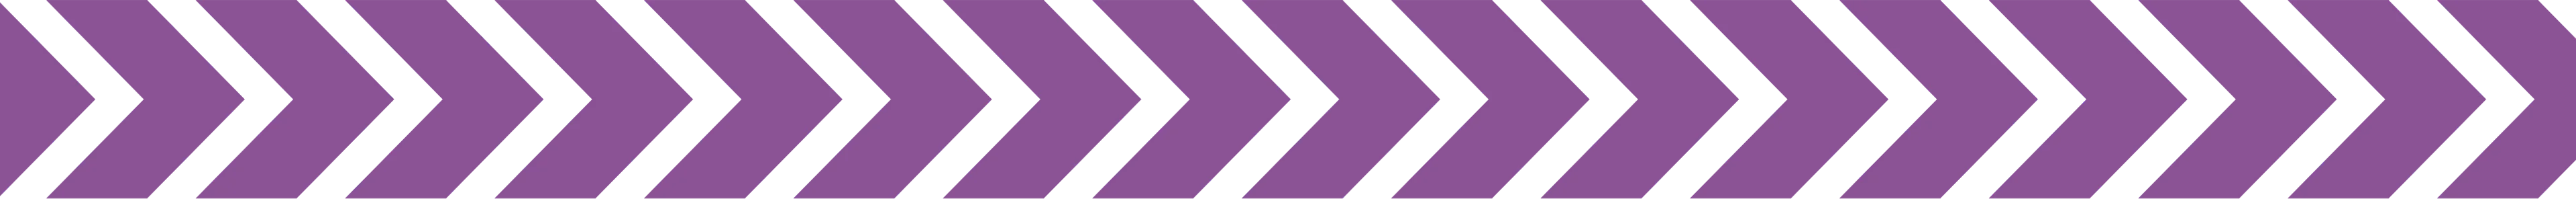 Purple Right Arrows